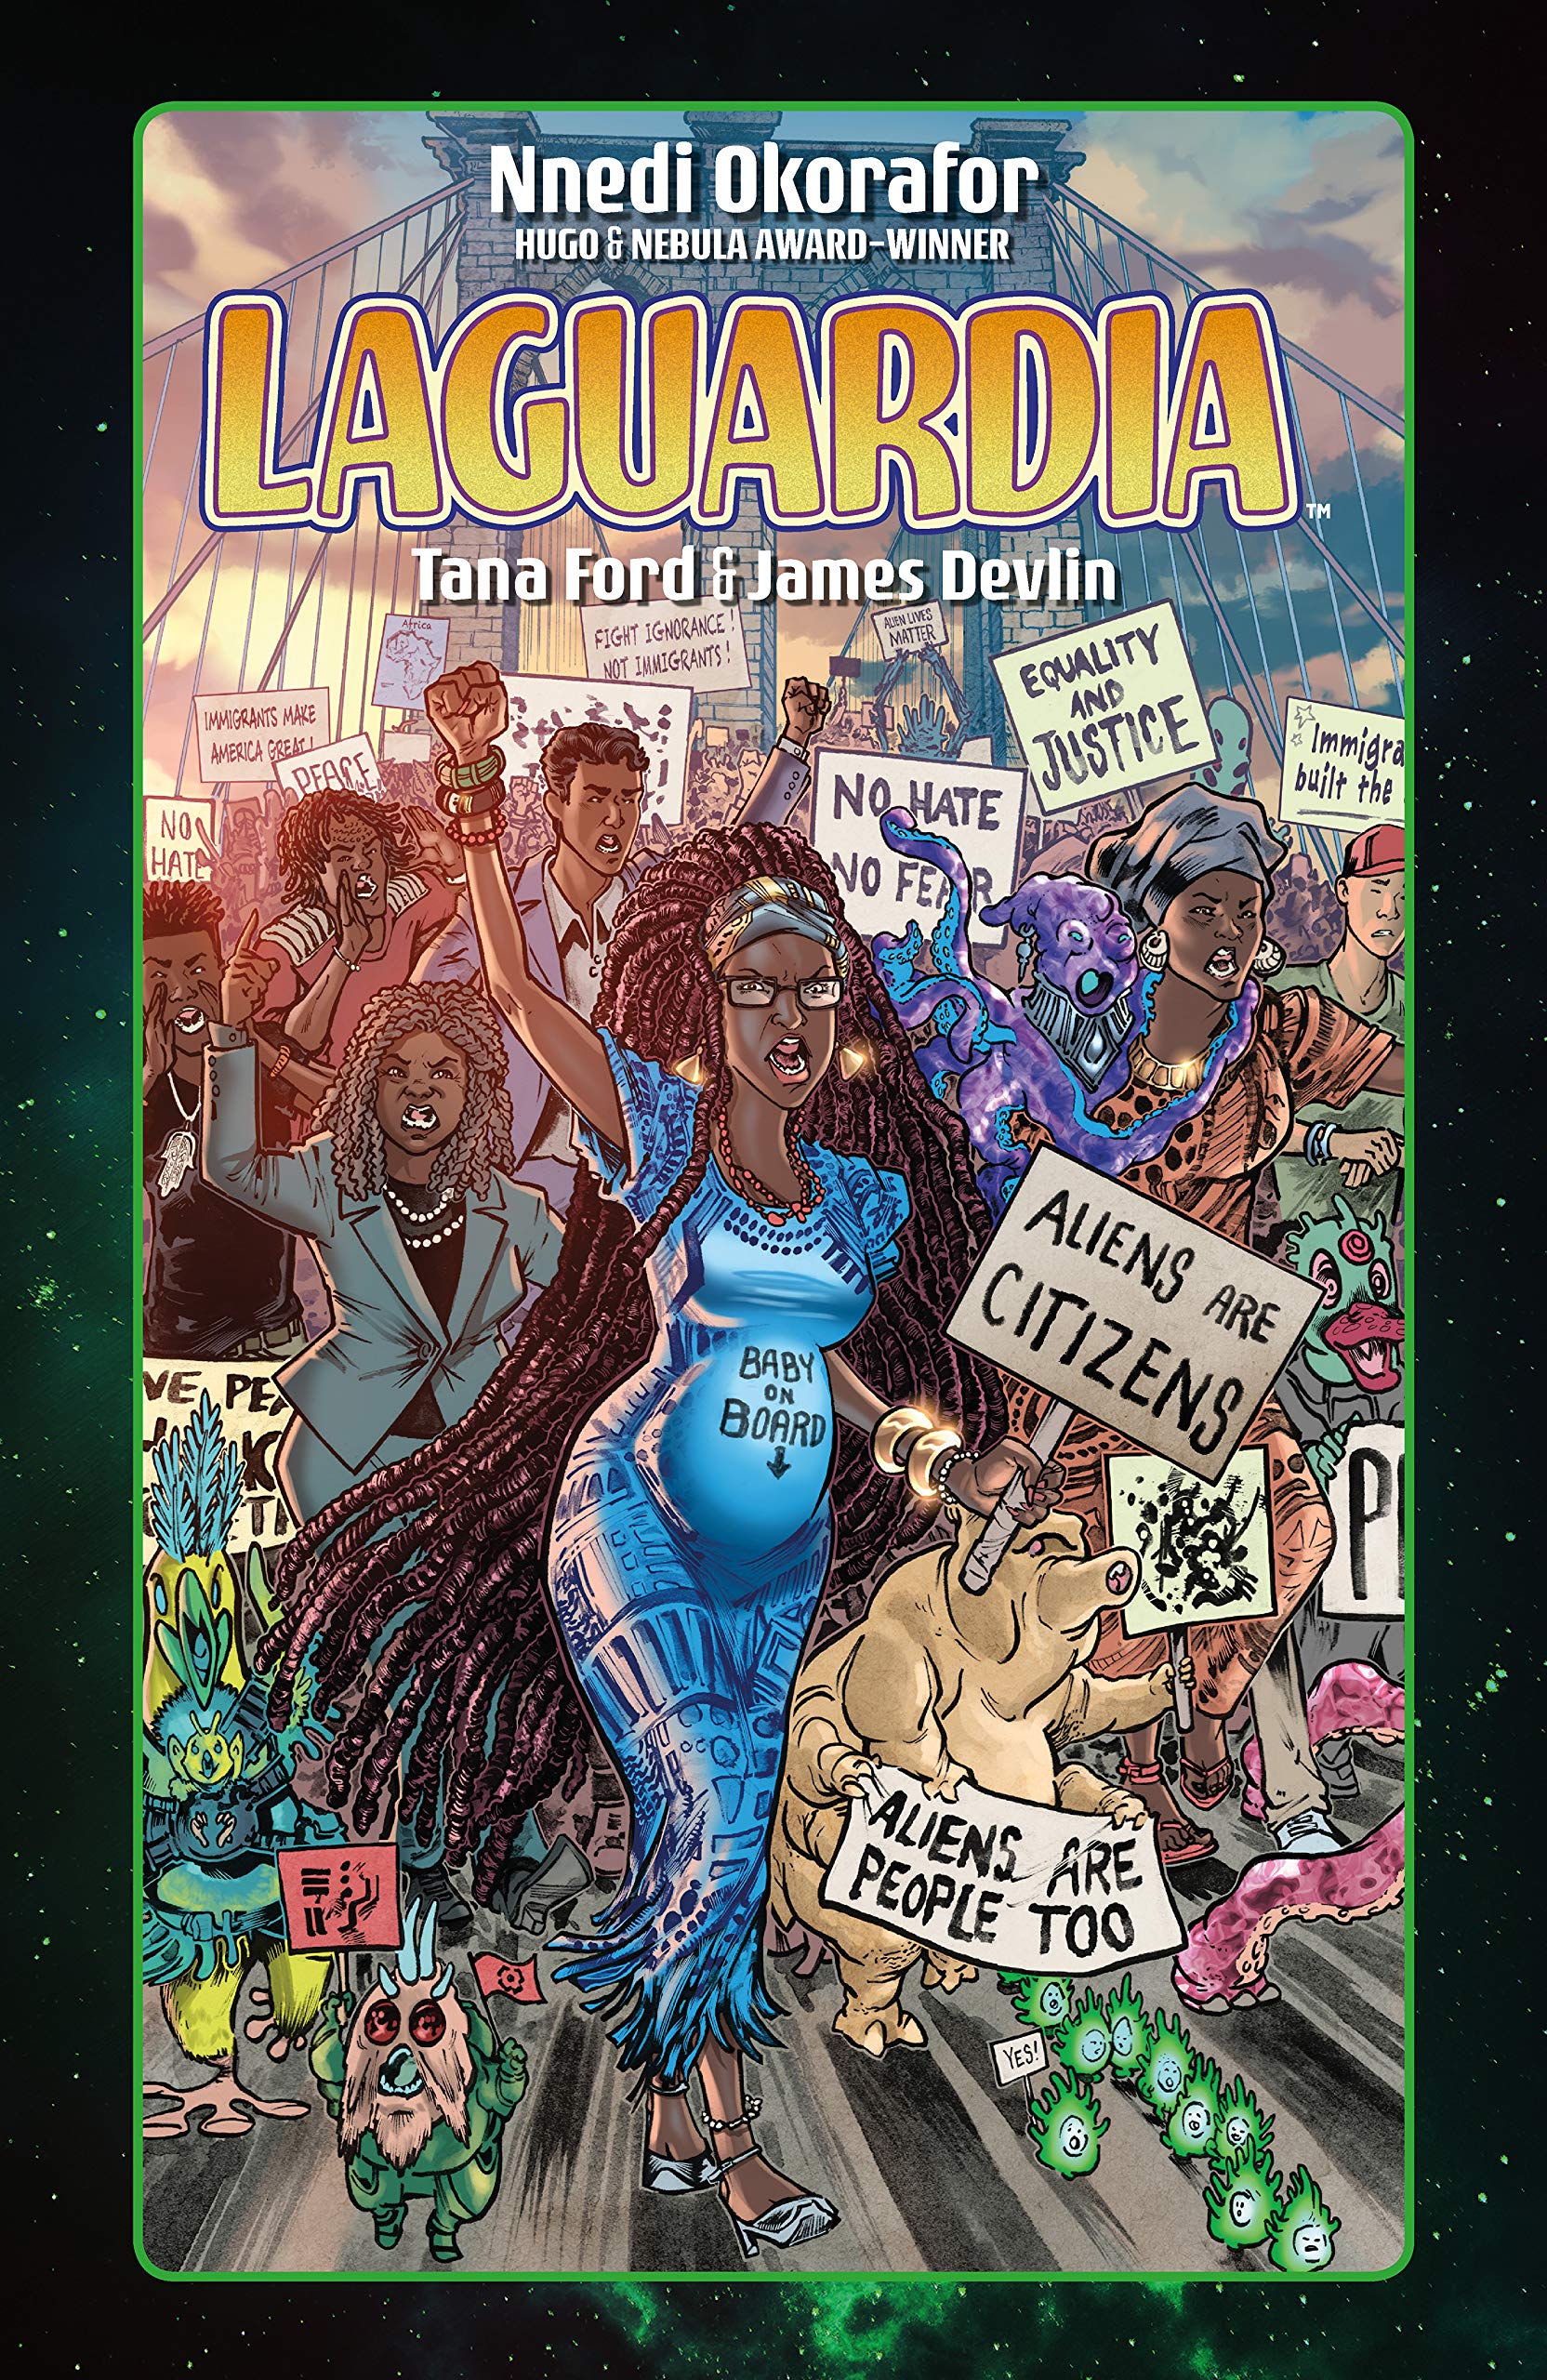 LaGuardia (2019) by Nnedi Okorafor. Image from nnedi.com